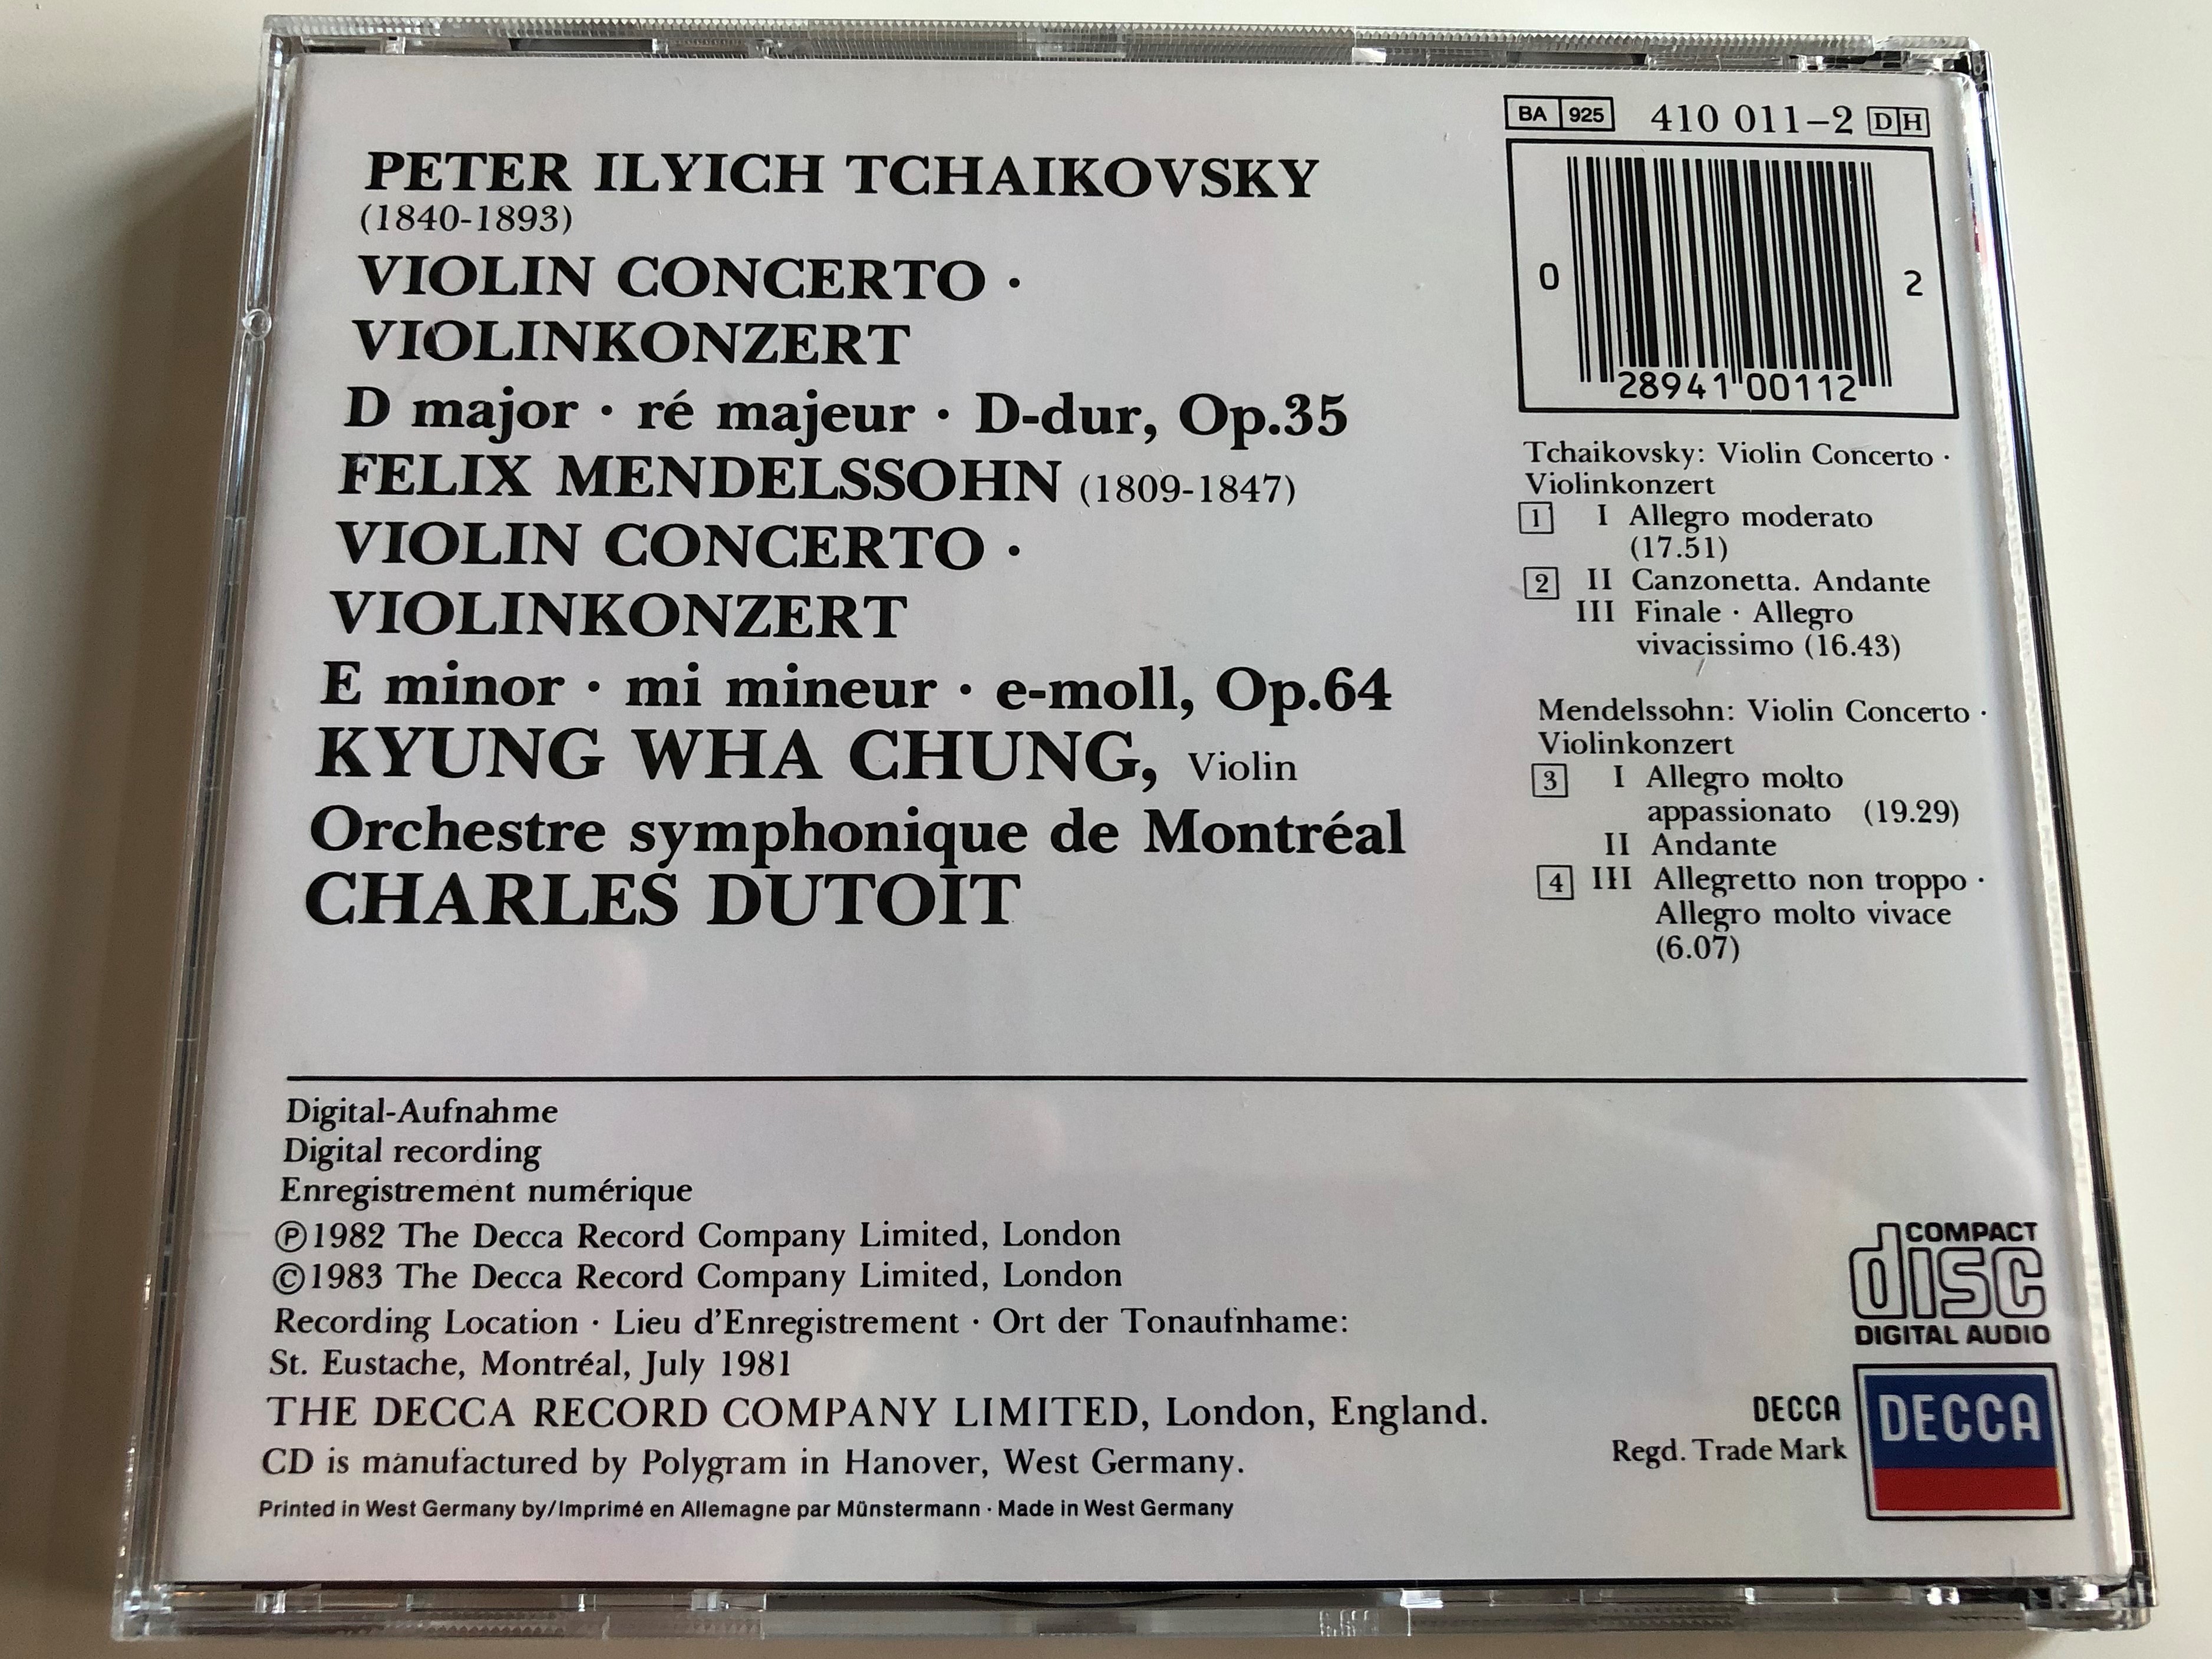 tchaikovsky-mendelssohn-violin-concertos-kyung-wha-chung-orchestre-symphonique-de-montr-al-charles-dutoit-decca-audio-cd-1983-stereo-410-011-2-4-.jpg